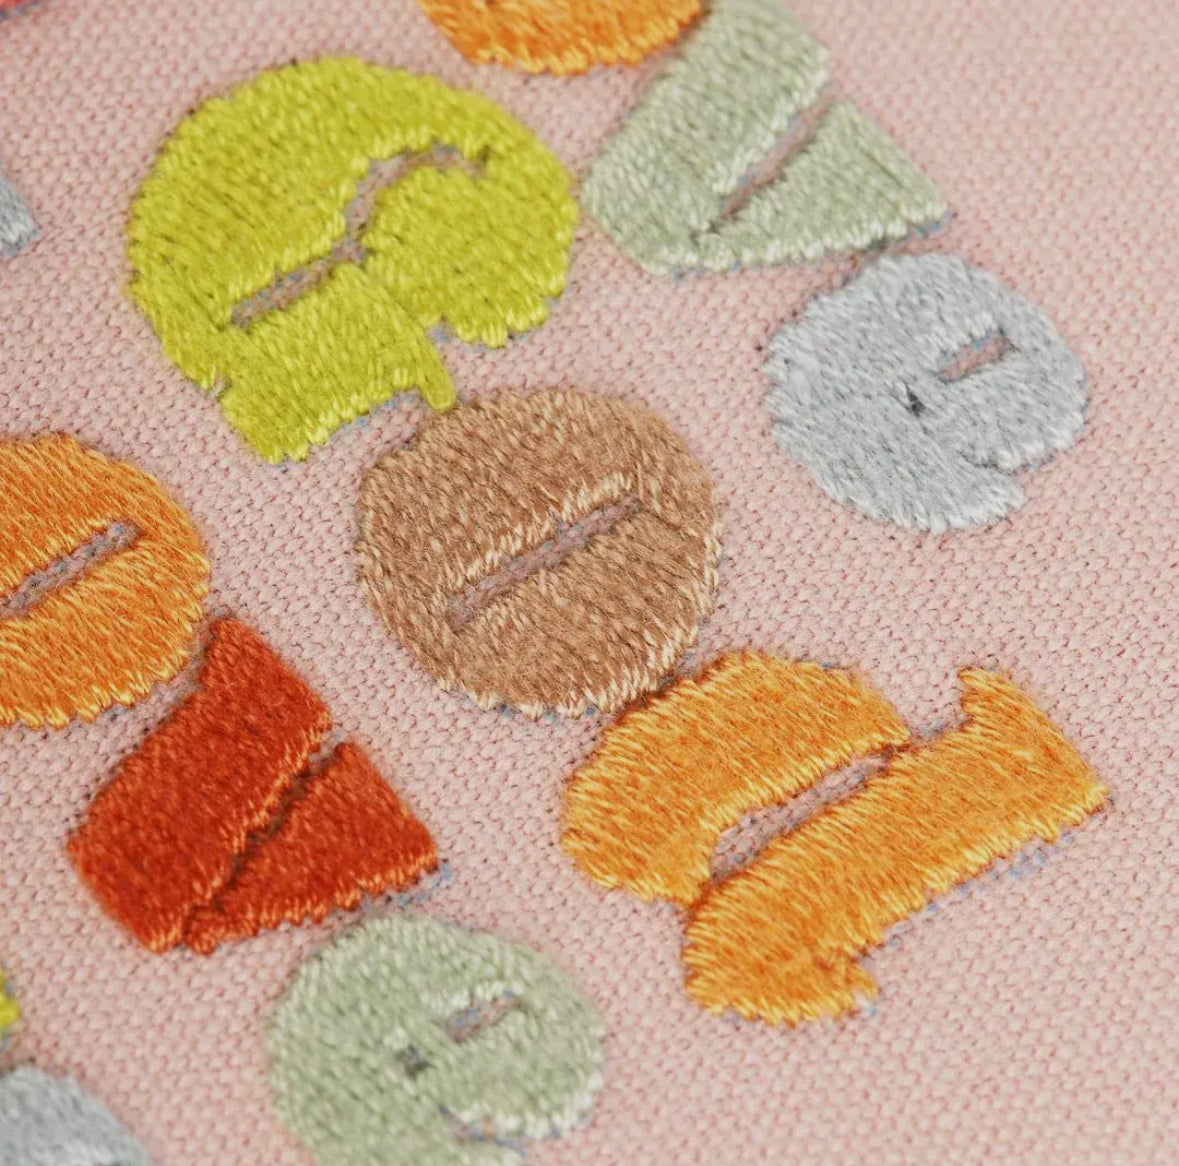 Love God Love People - Embroidery Kit